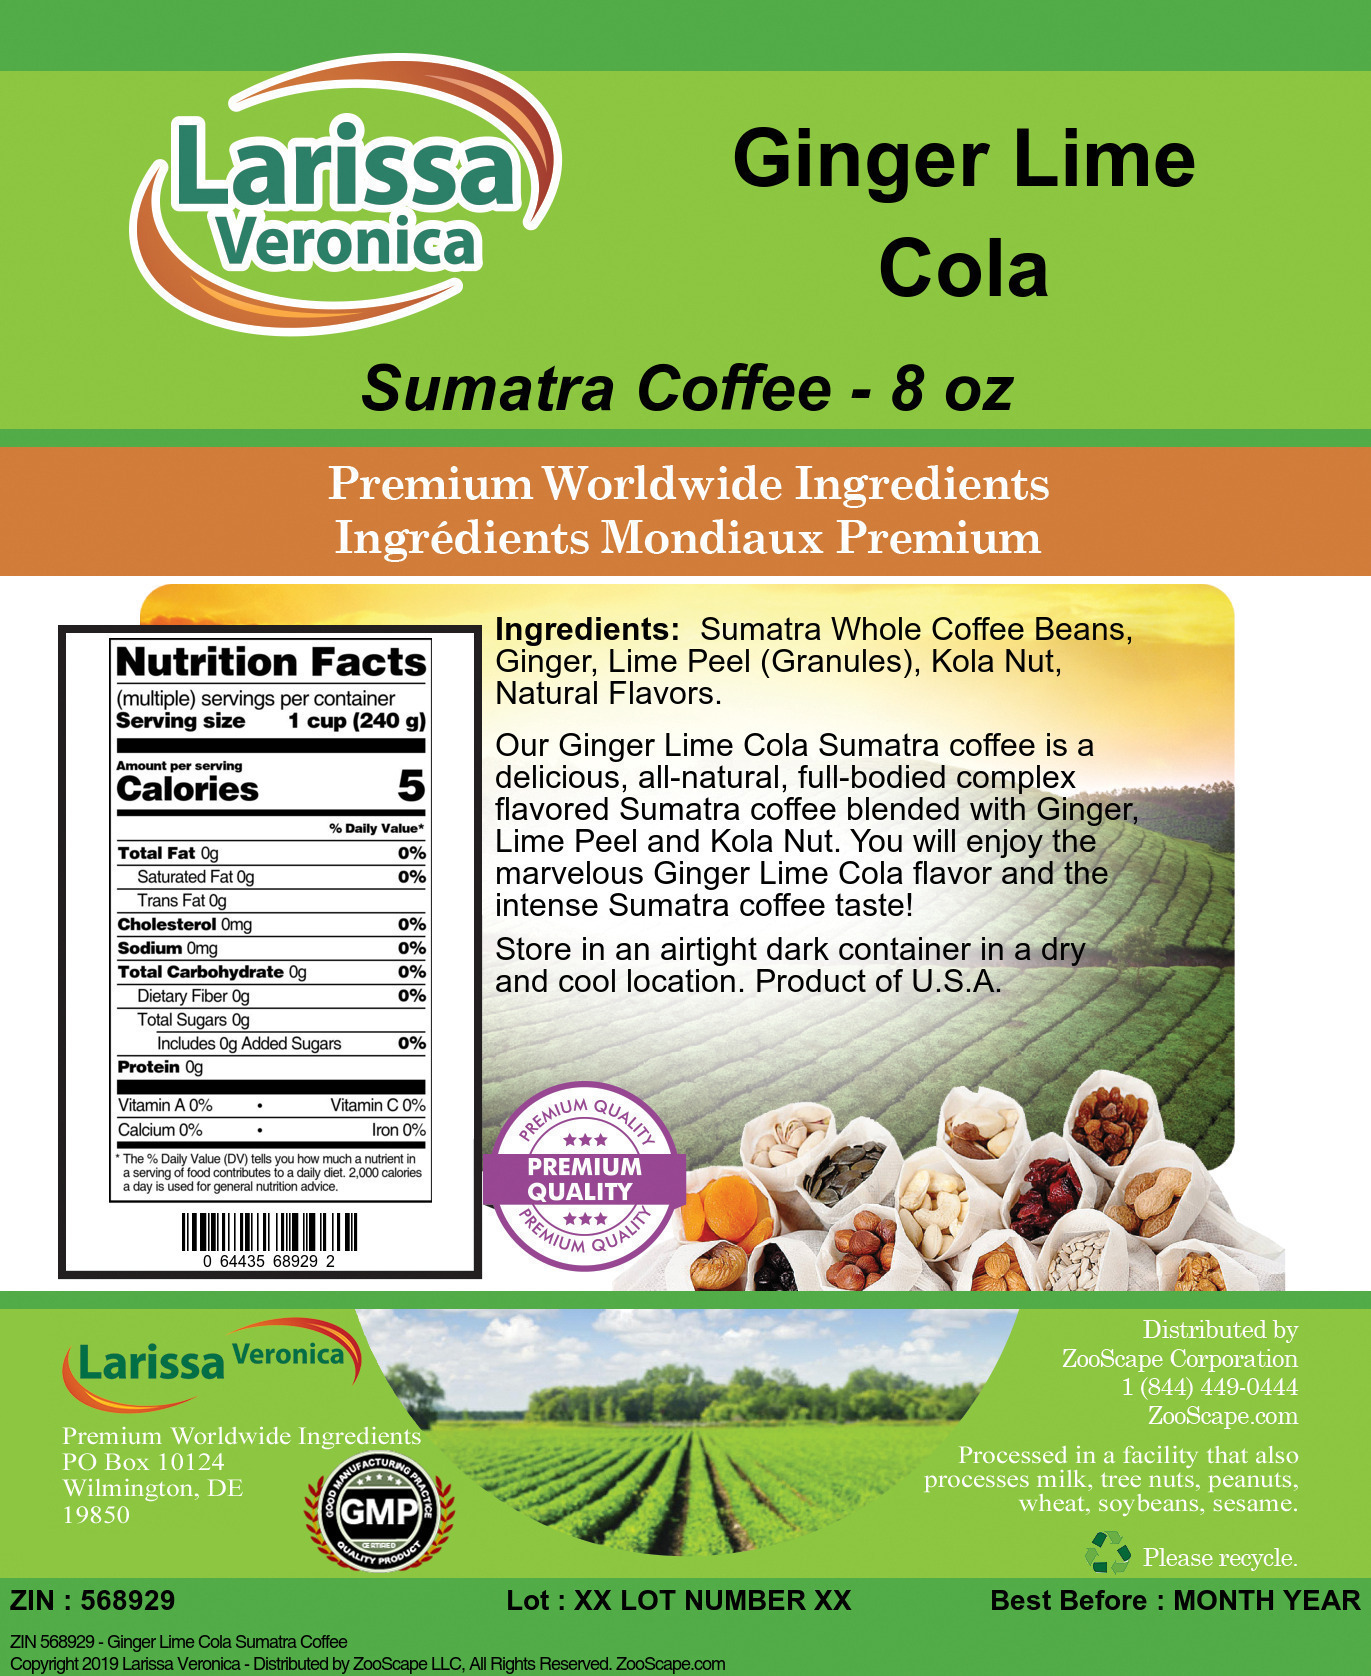 Ginger Lime Cola Sumatra Coffee - Label